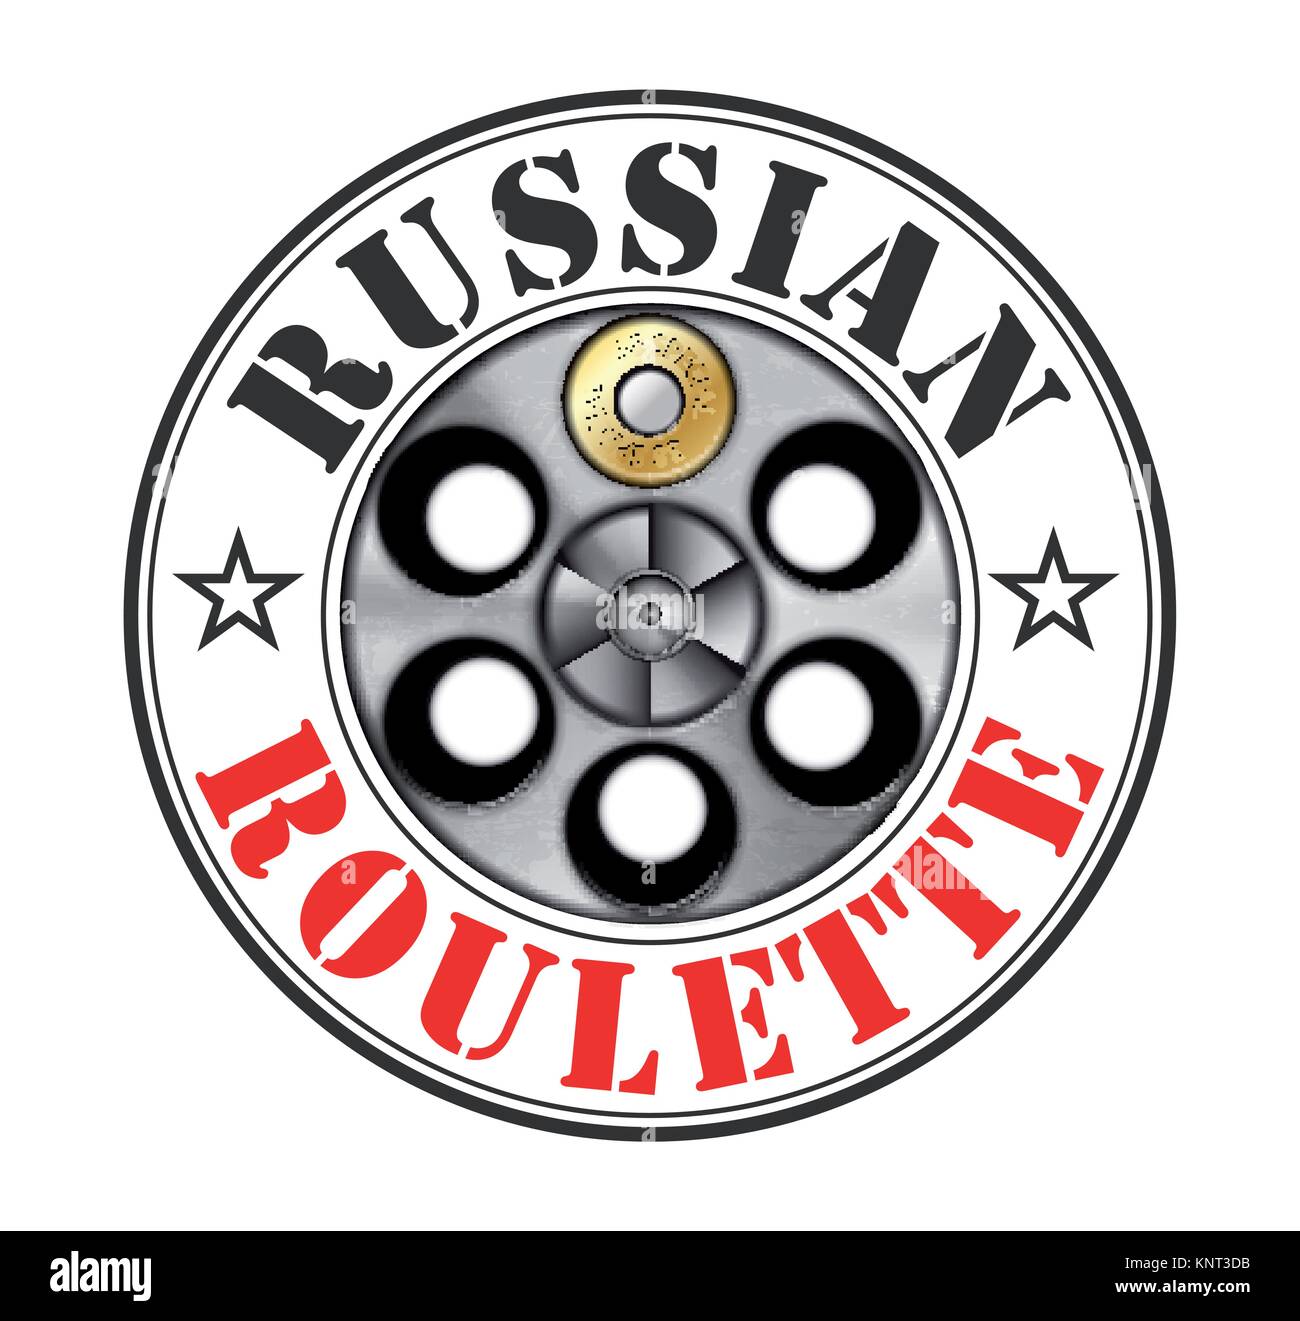 Revolver - russian roulette game - risk concept – stock illustration Stock Vector